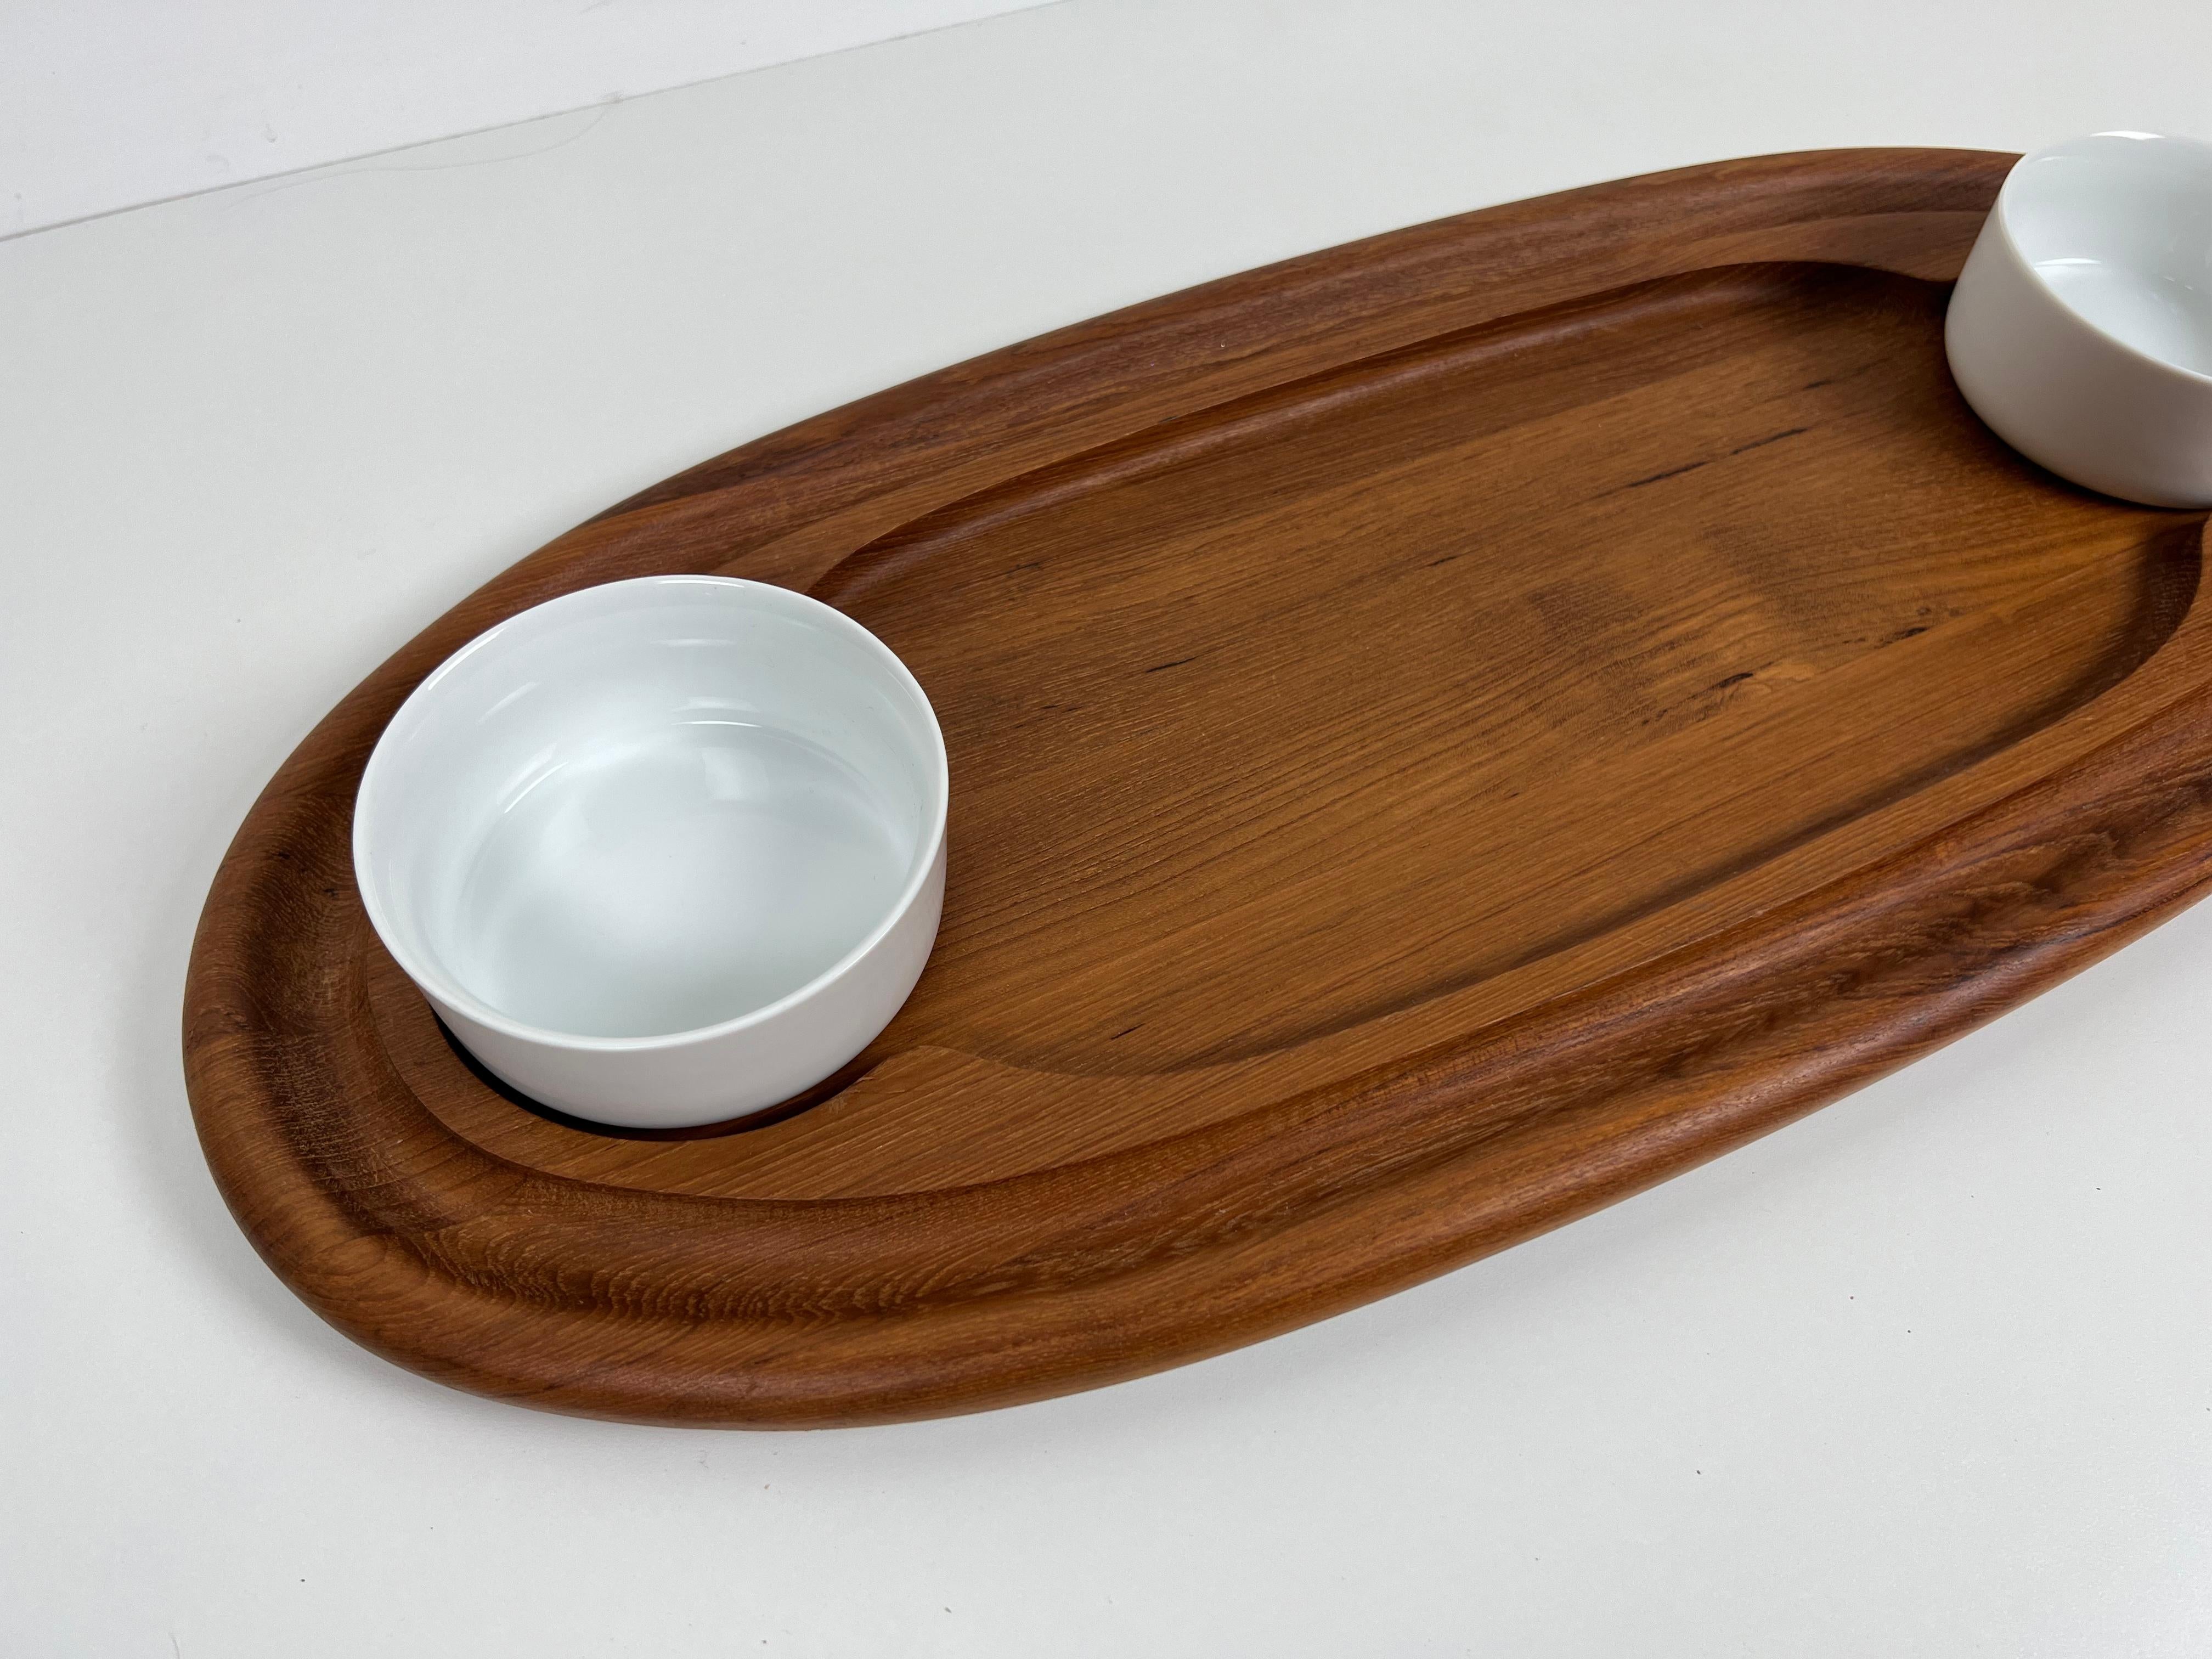 Scandinavian Modern Teak Serving Platter with Bowls by Jens Quistgaard for Dansk